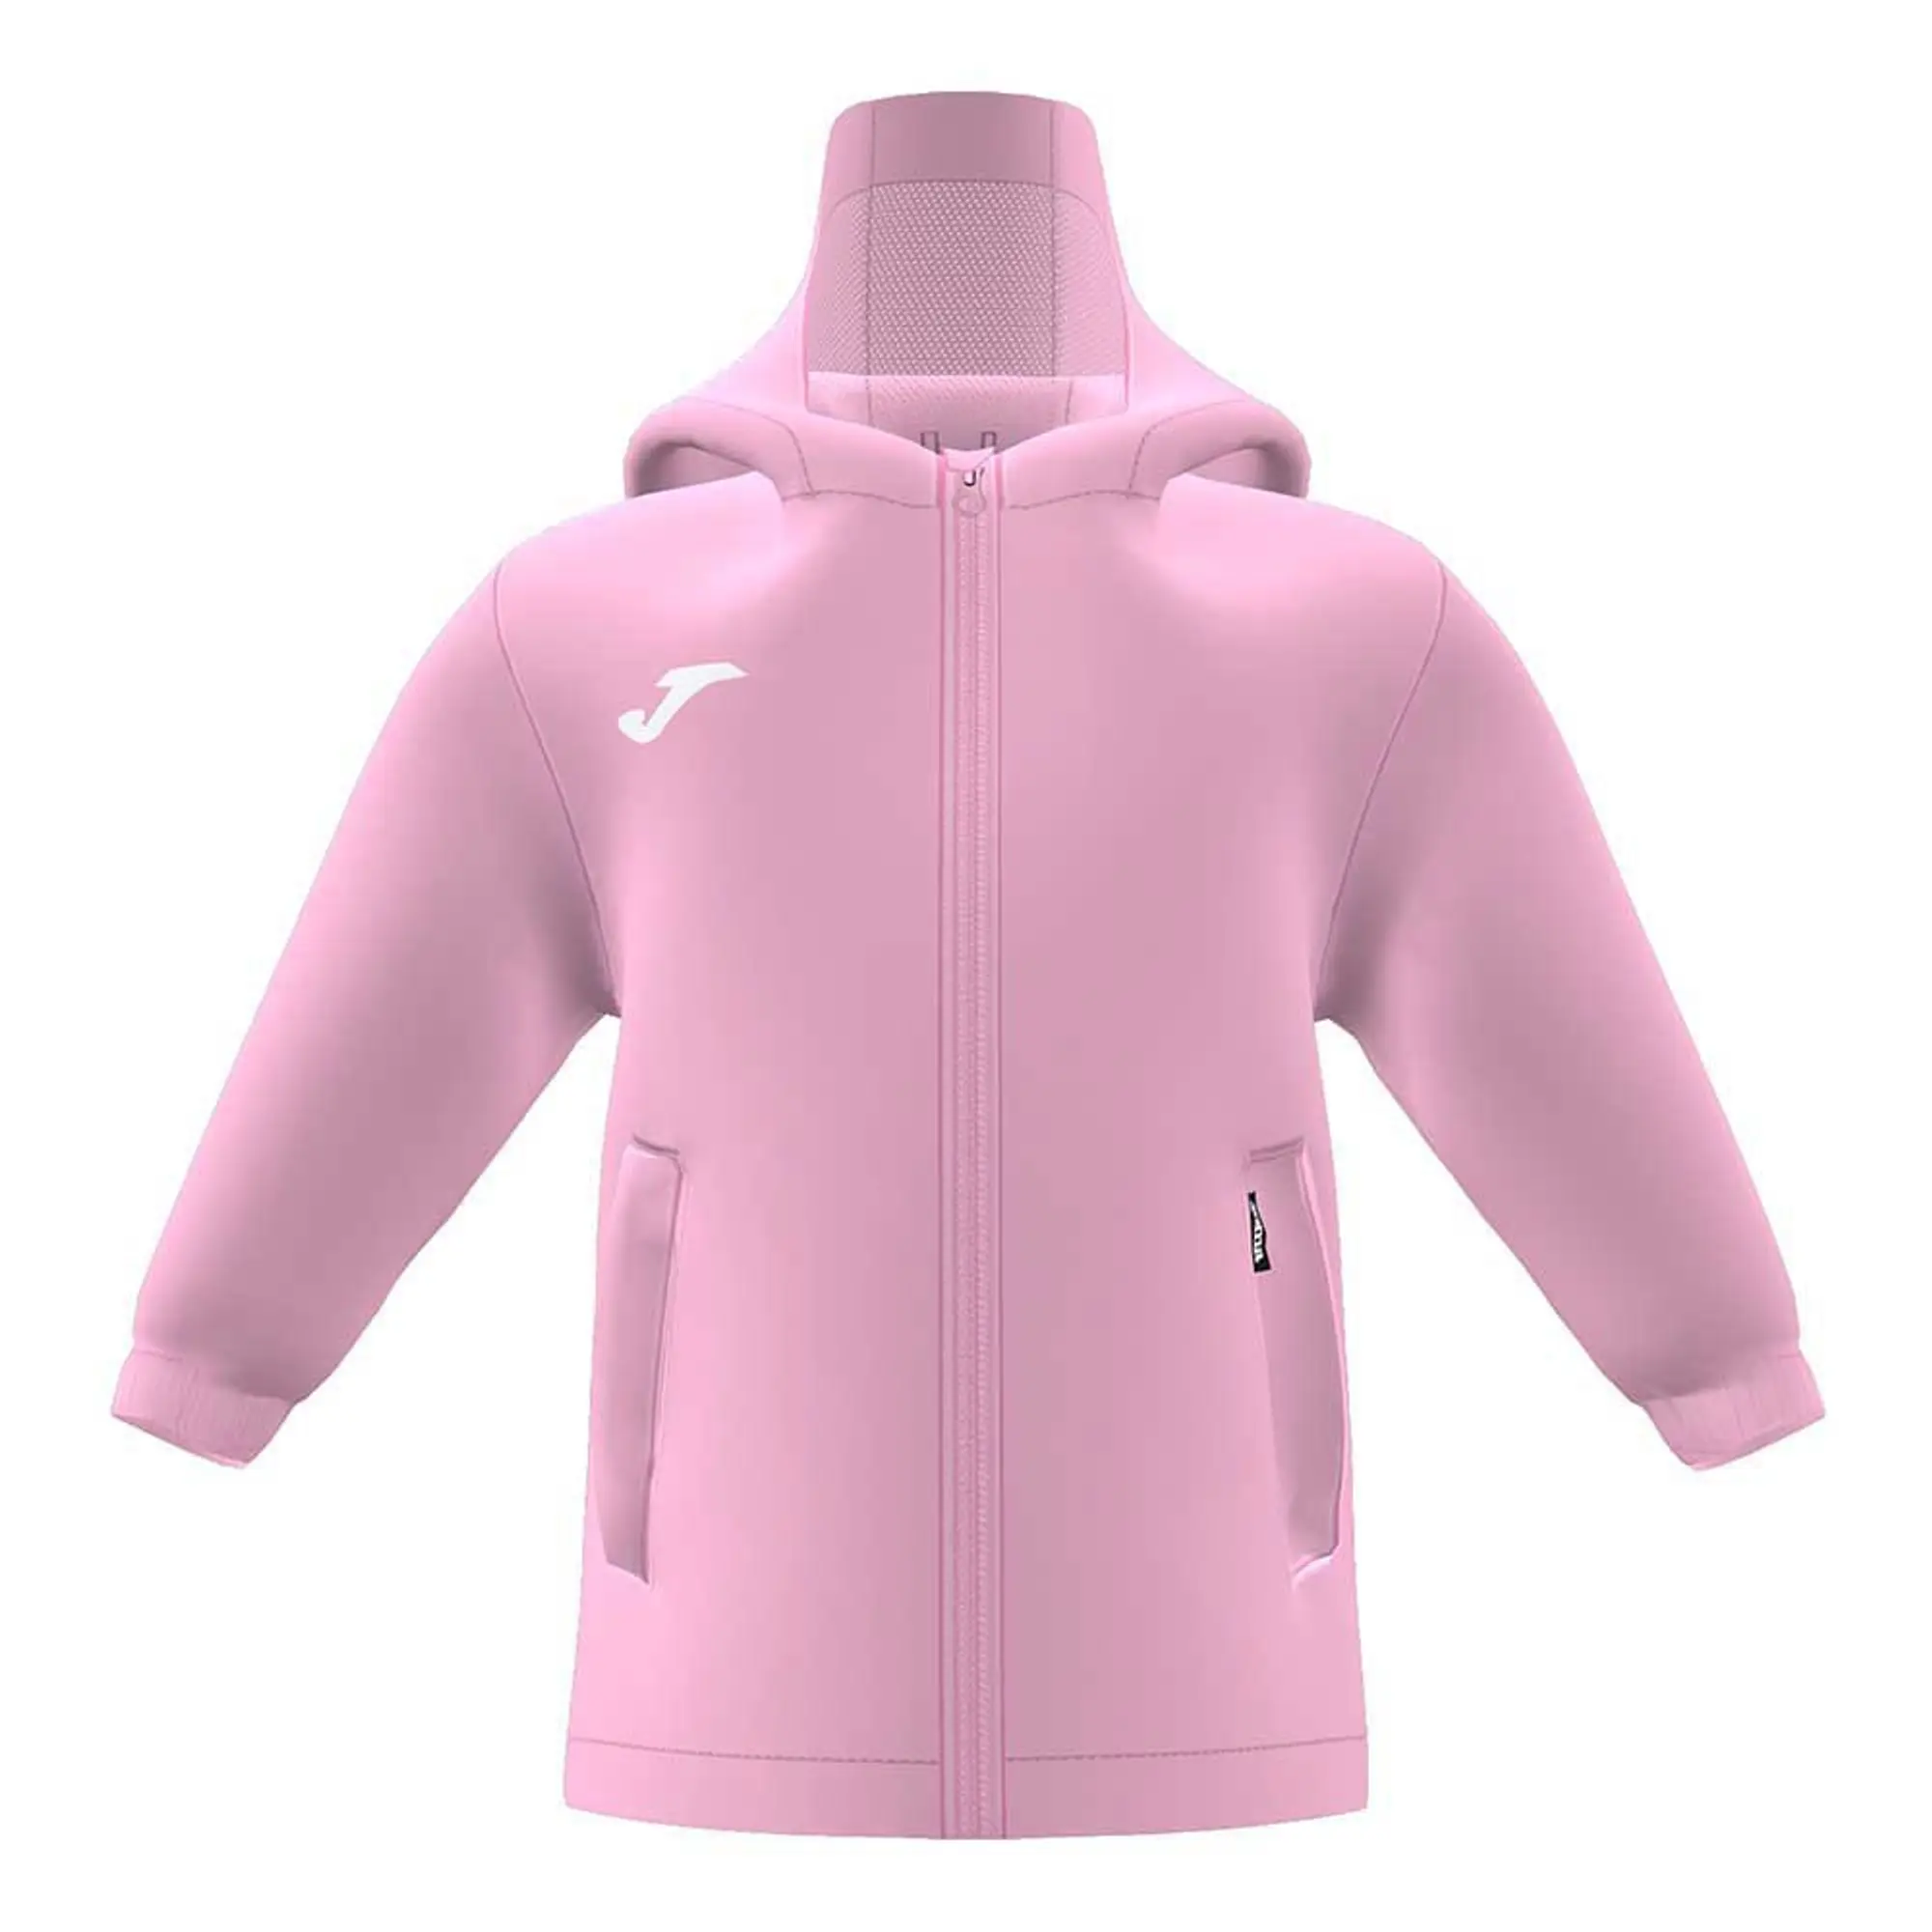 Joma Lion Jacket  - Pink